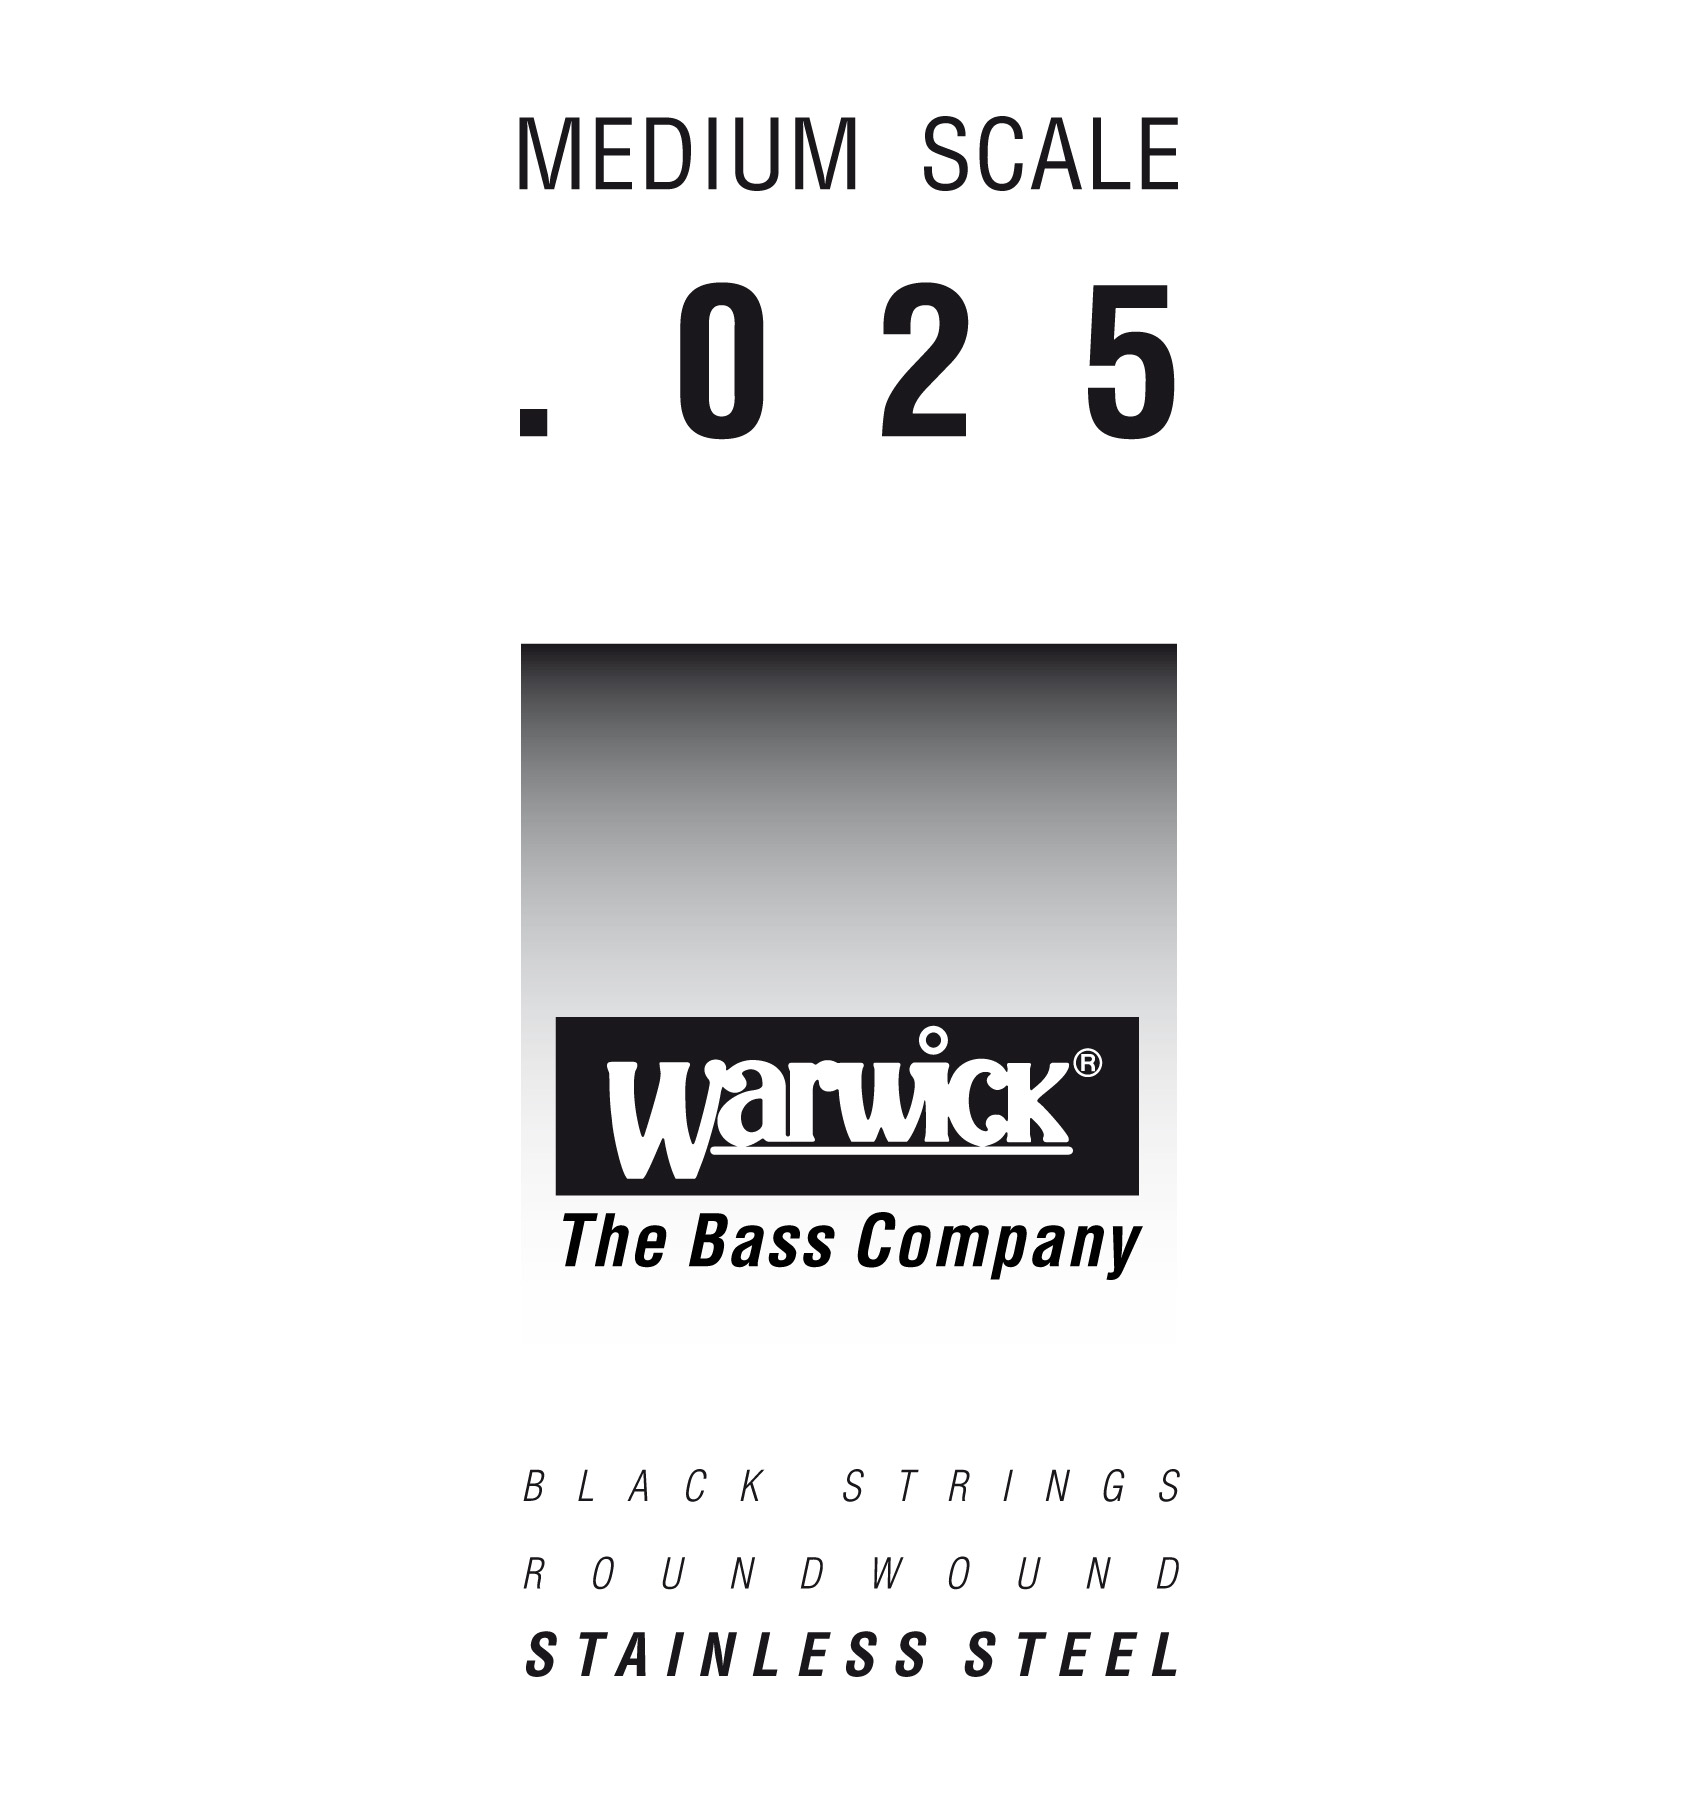 Warwick Black Label Bass Strings, Stainless Steel - Bass Single String, .025", Medium Scale